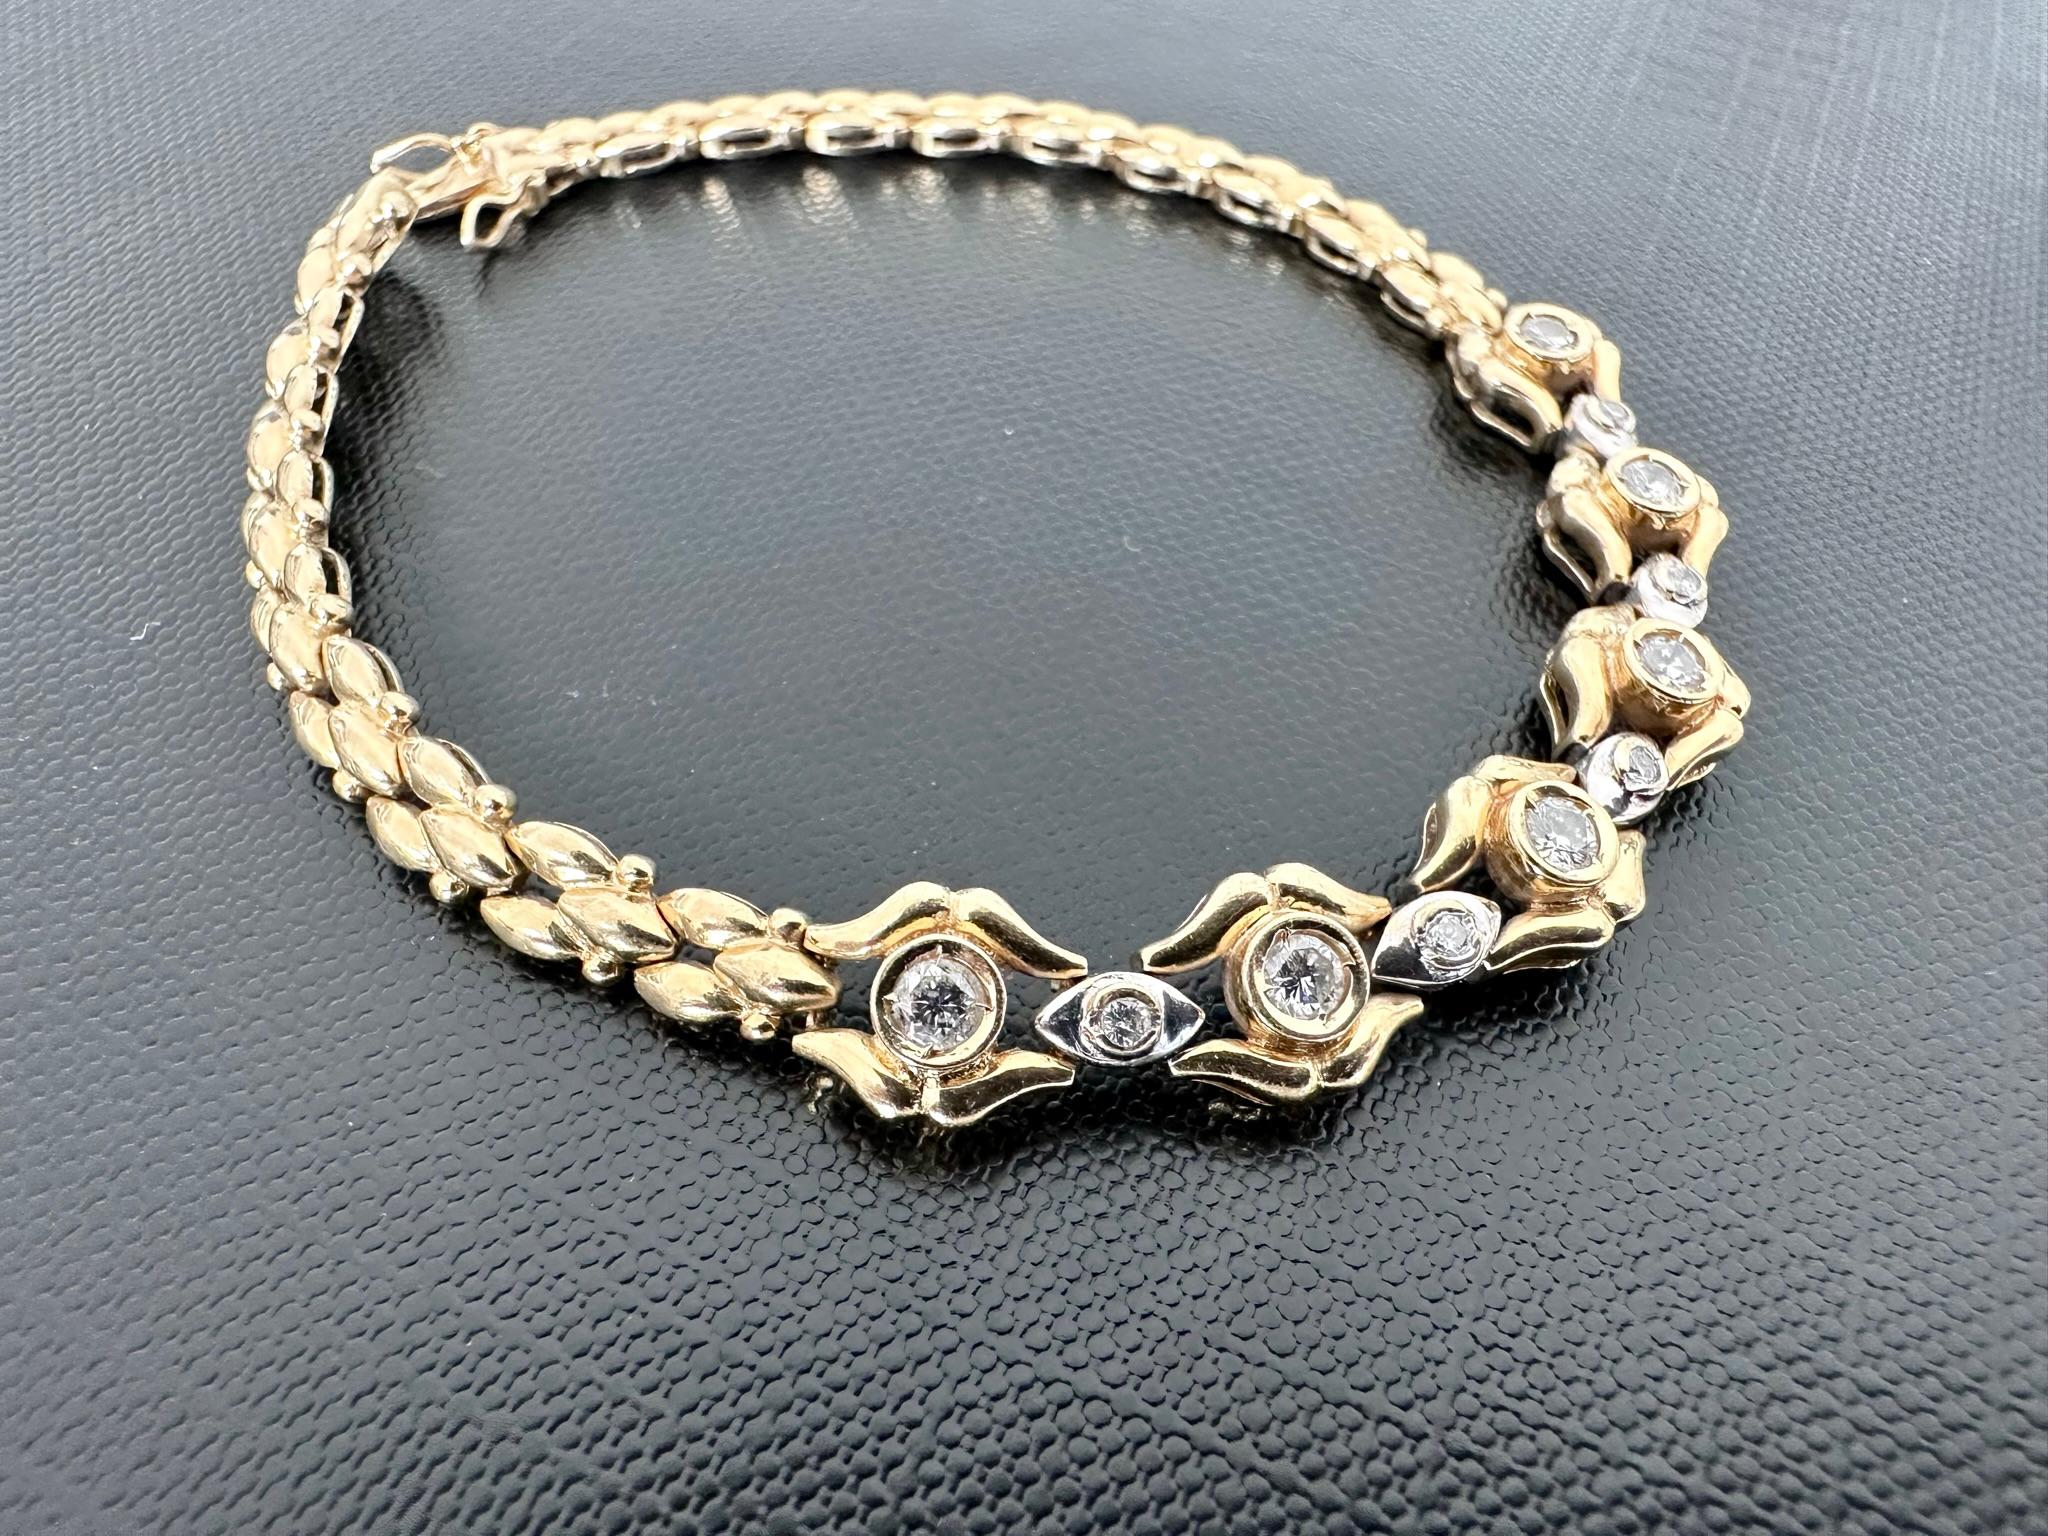 Brilliant Cut Spanish 18kt Gold Bracelet with Diamonds